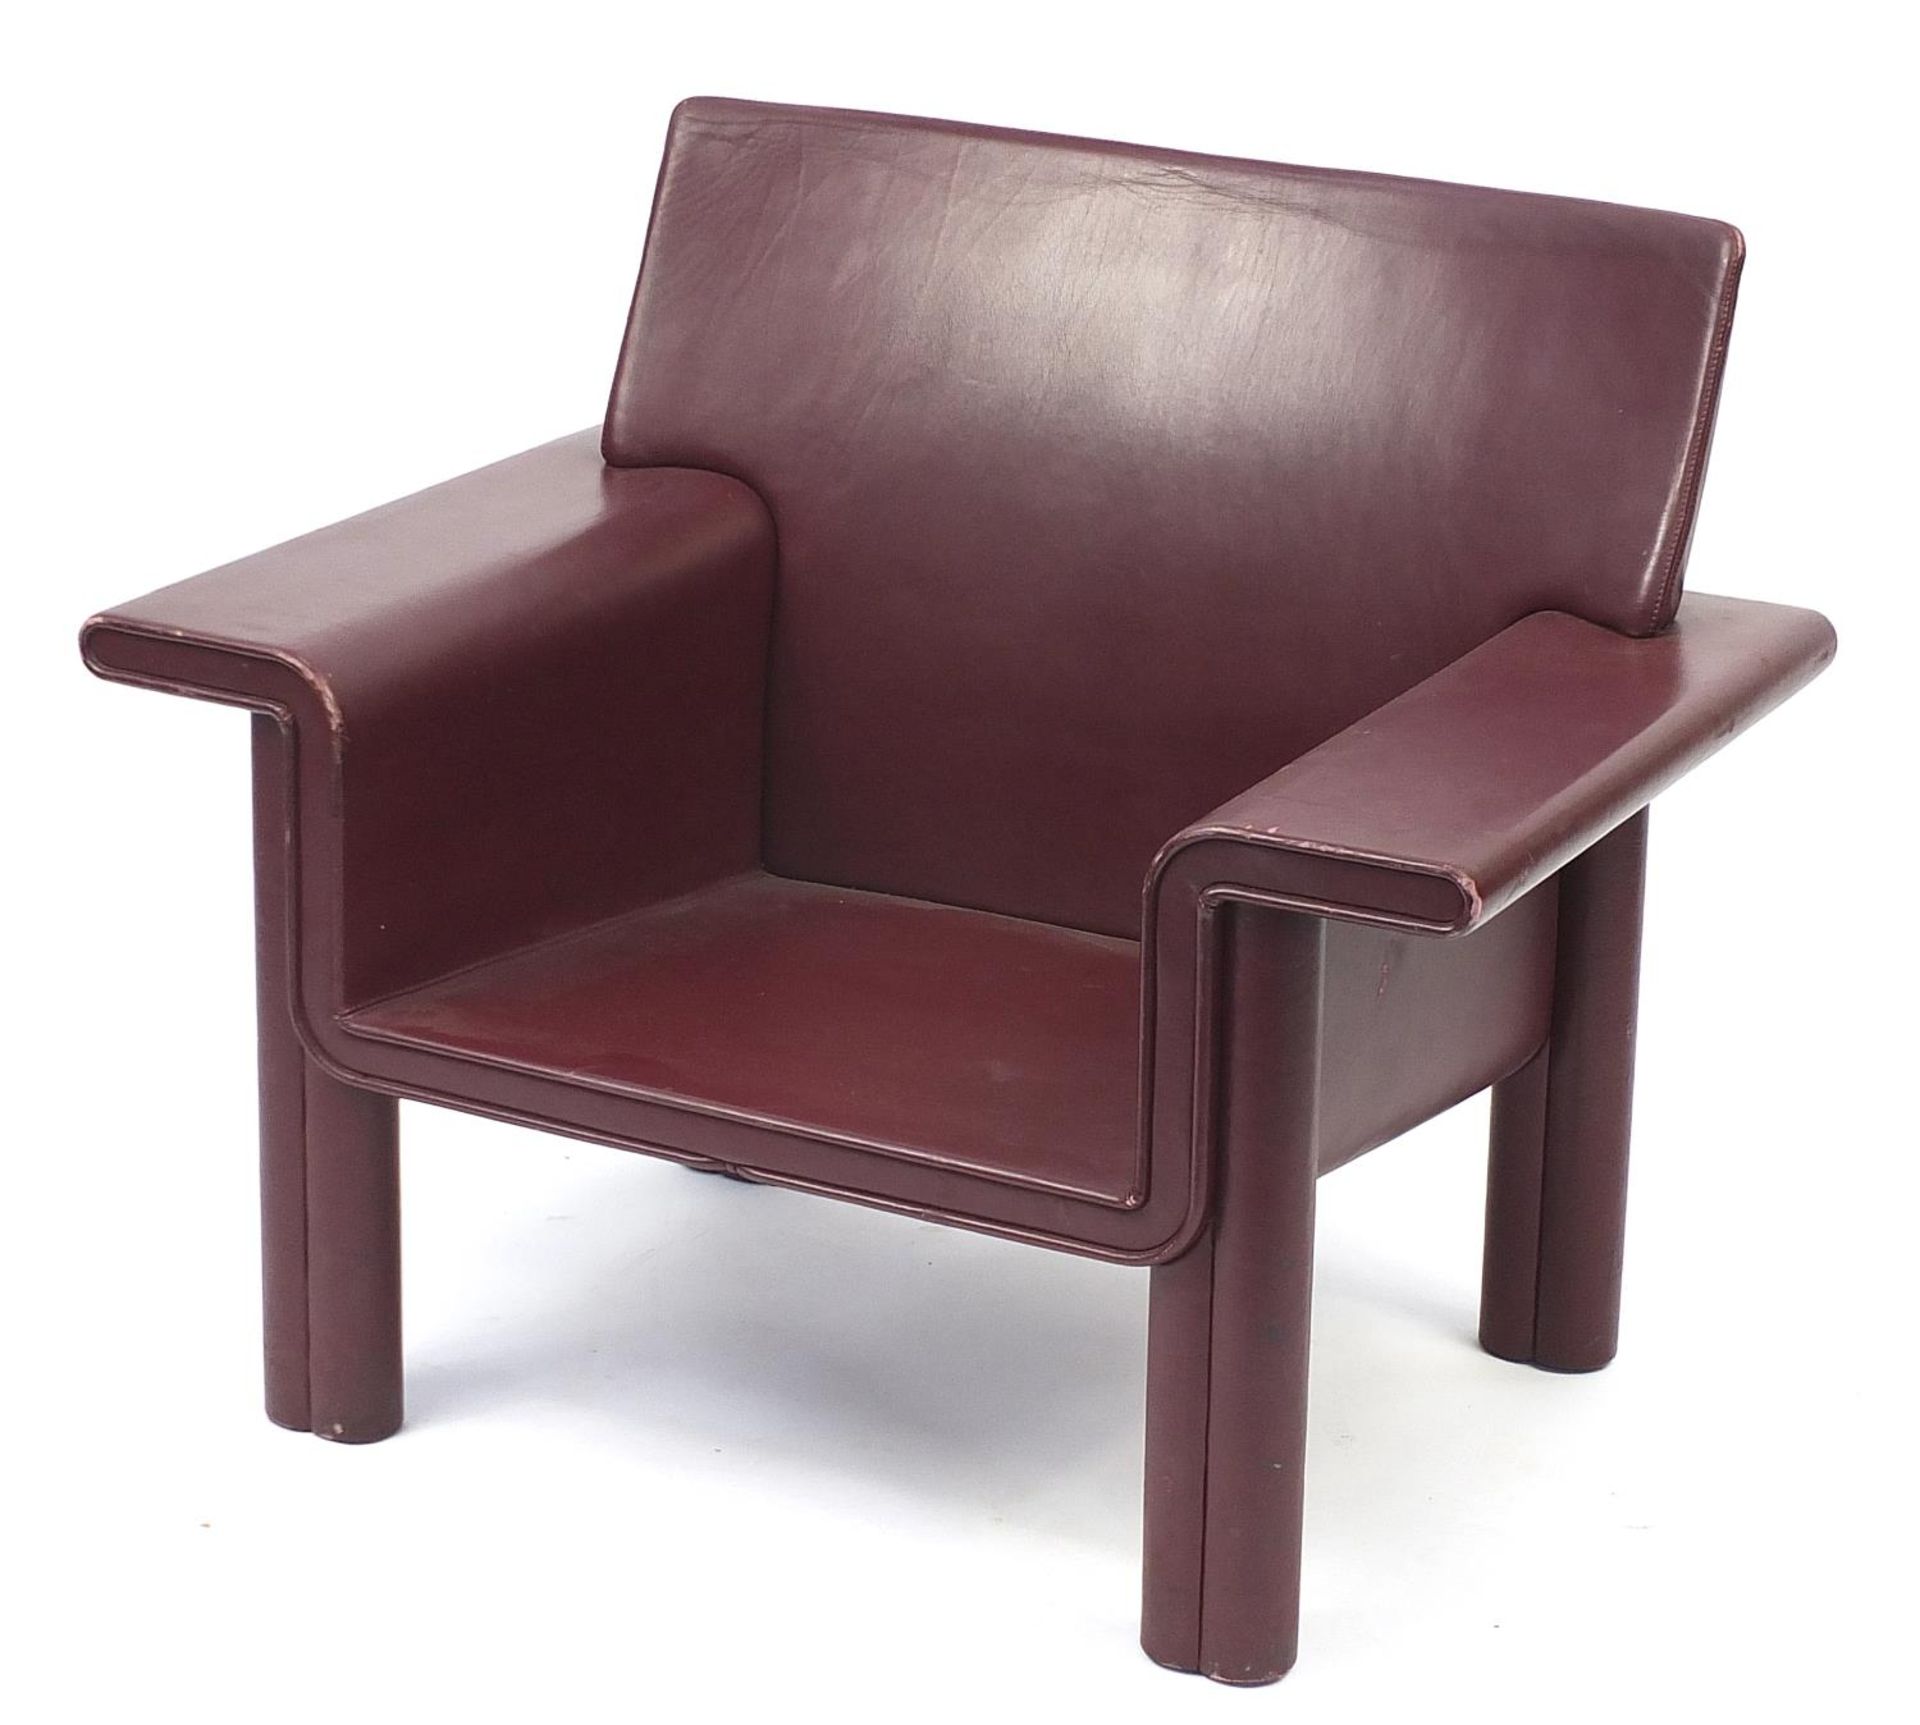 Afra and Tobia Scarpa for Meritalia, Italian burgundy leather Cornelia armchair, 77cm H x 95cm W x